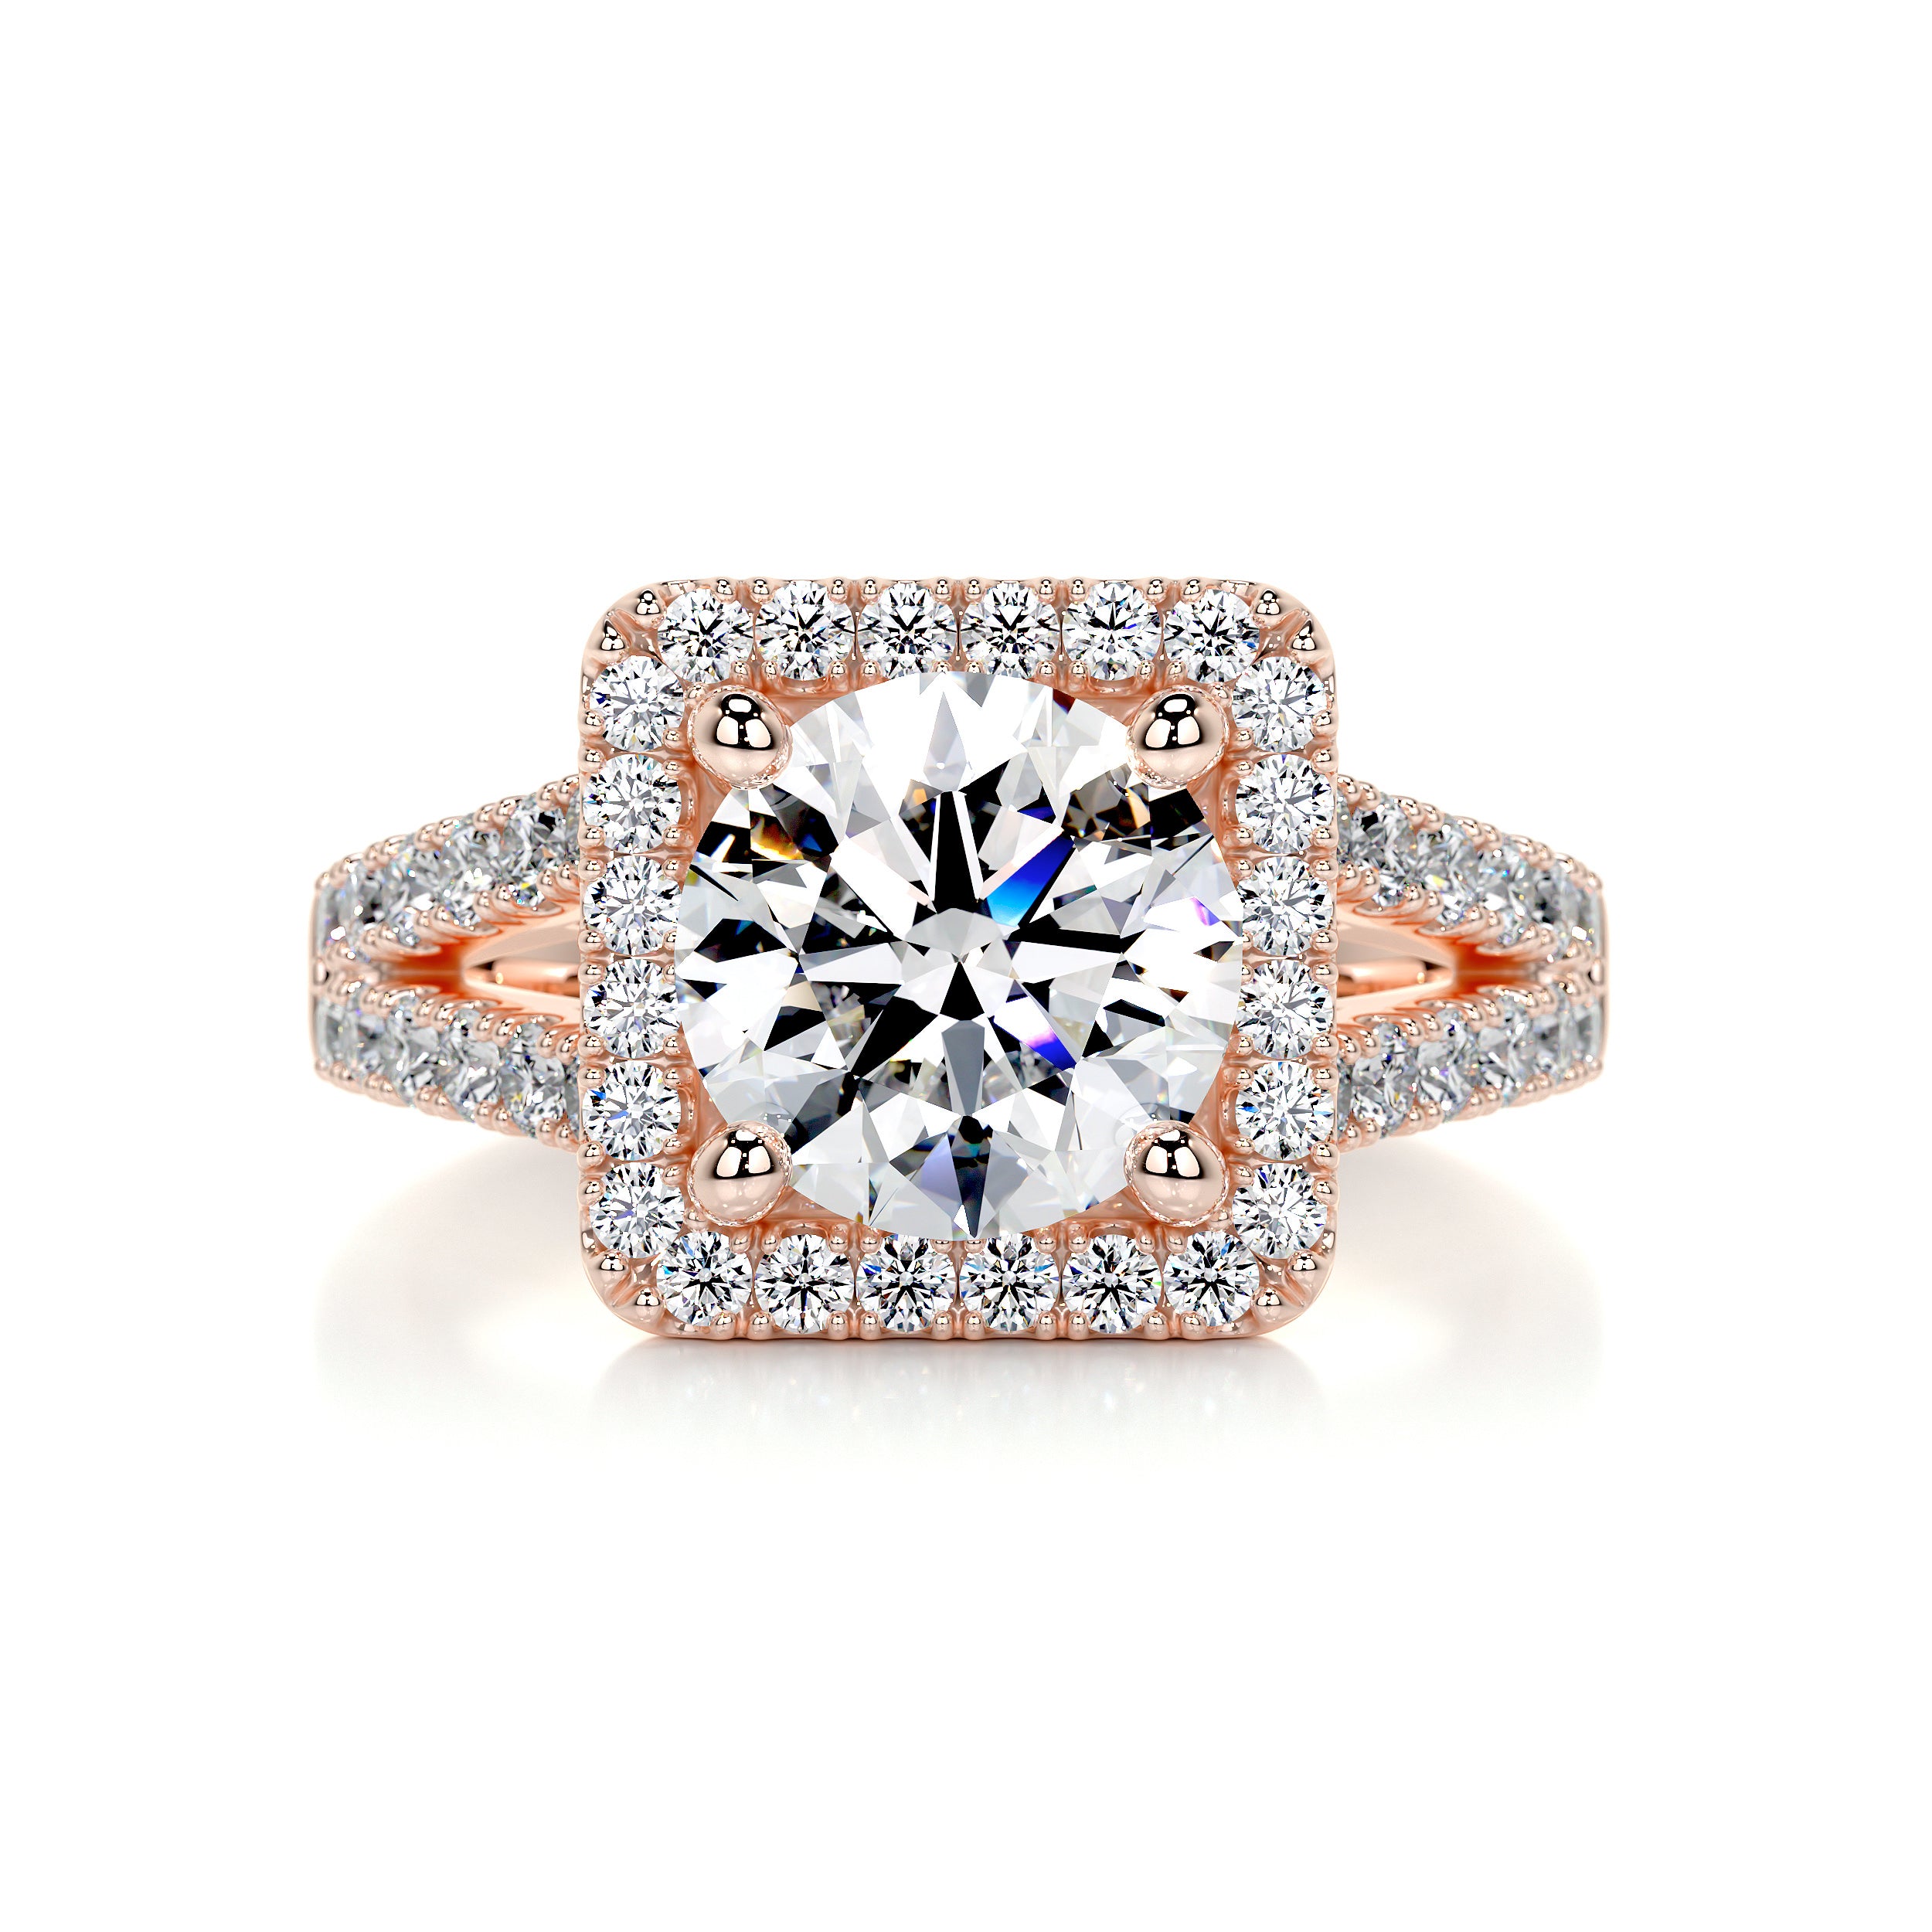 Addison Diamond Engagement Ring   (2.5 Carat) -14K Rose Gold